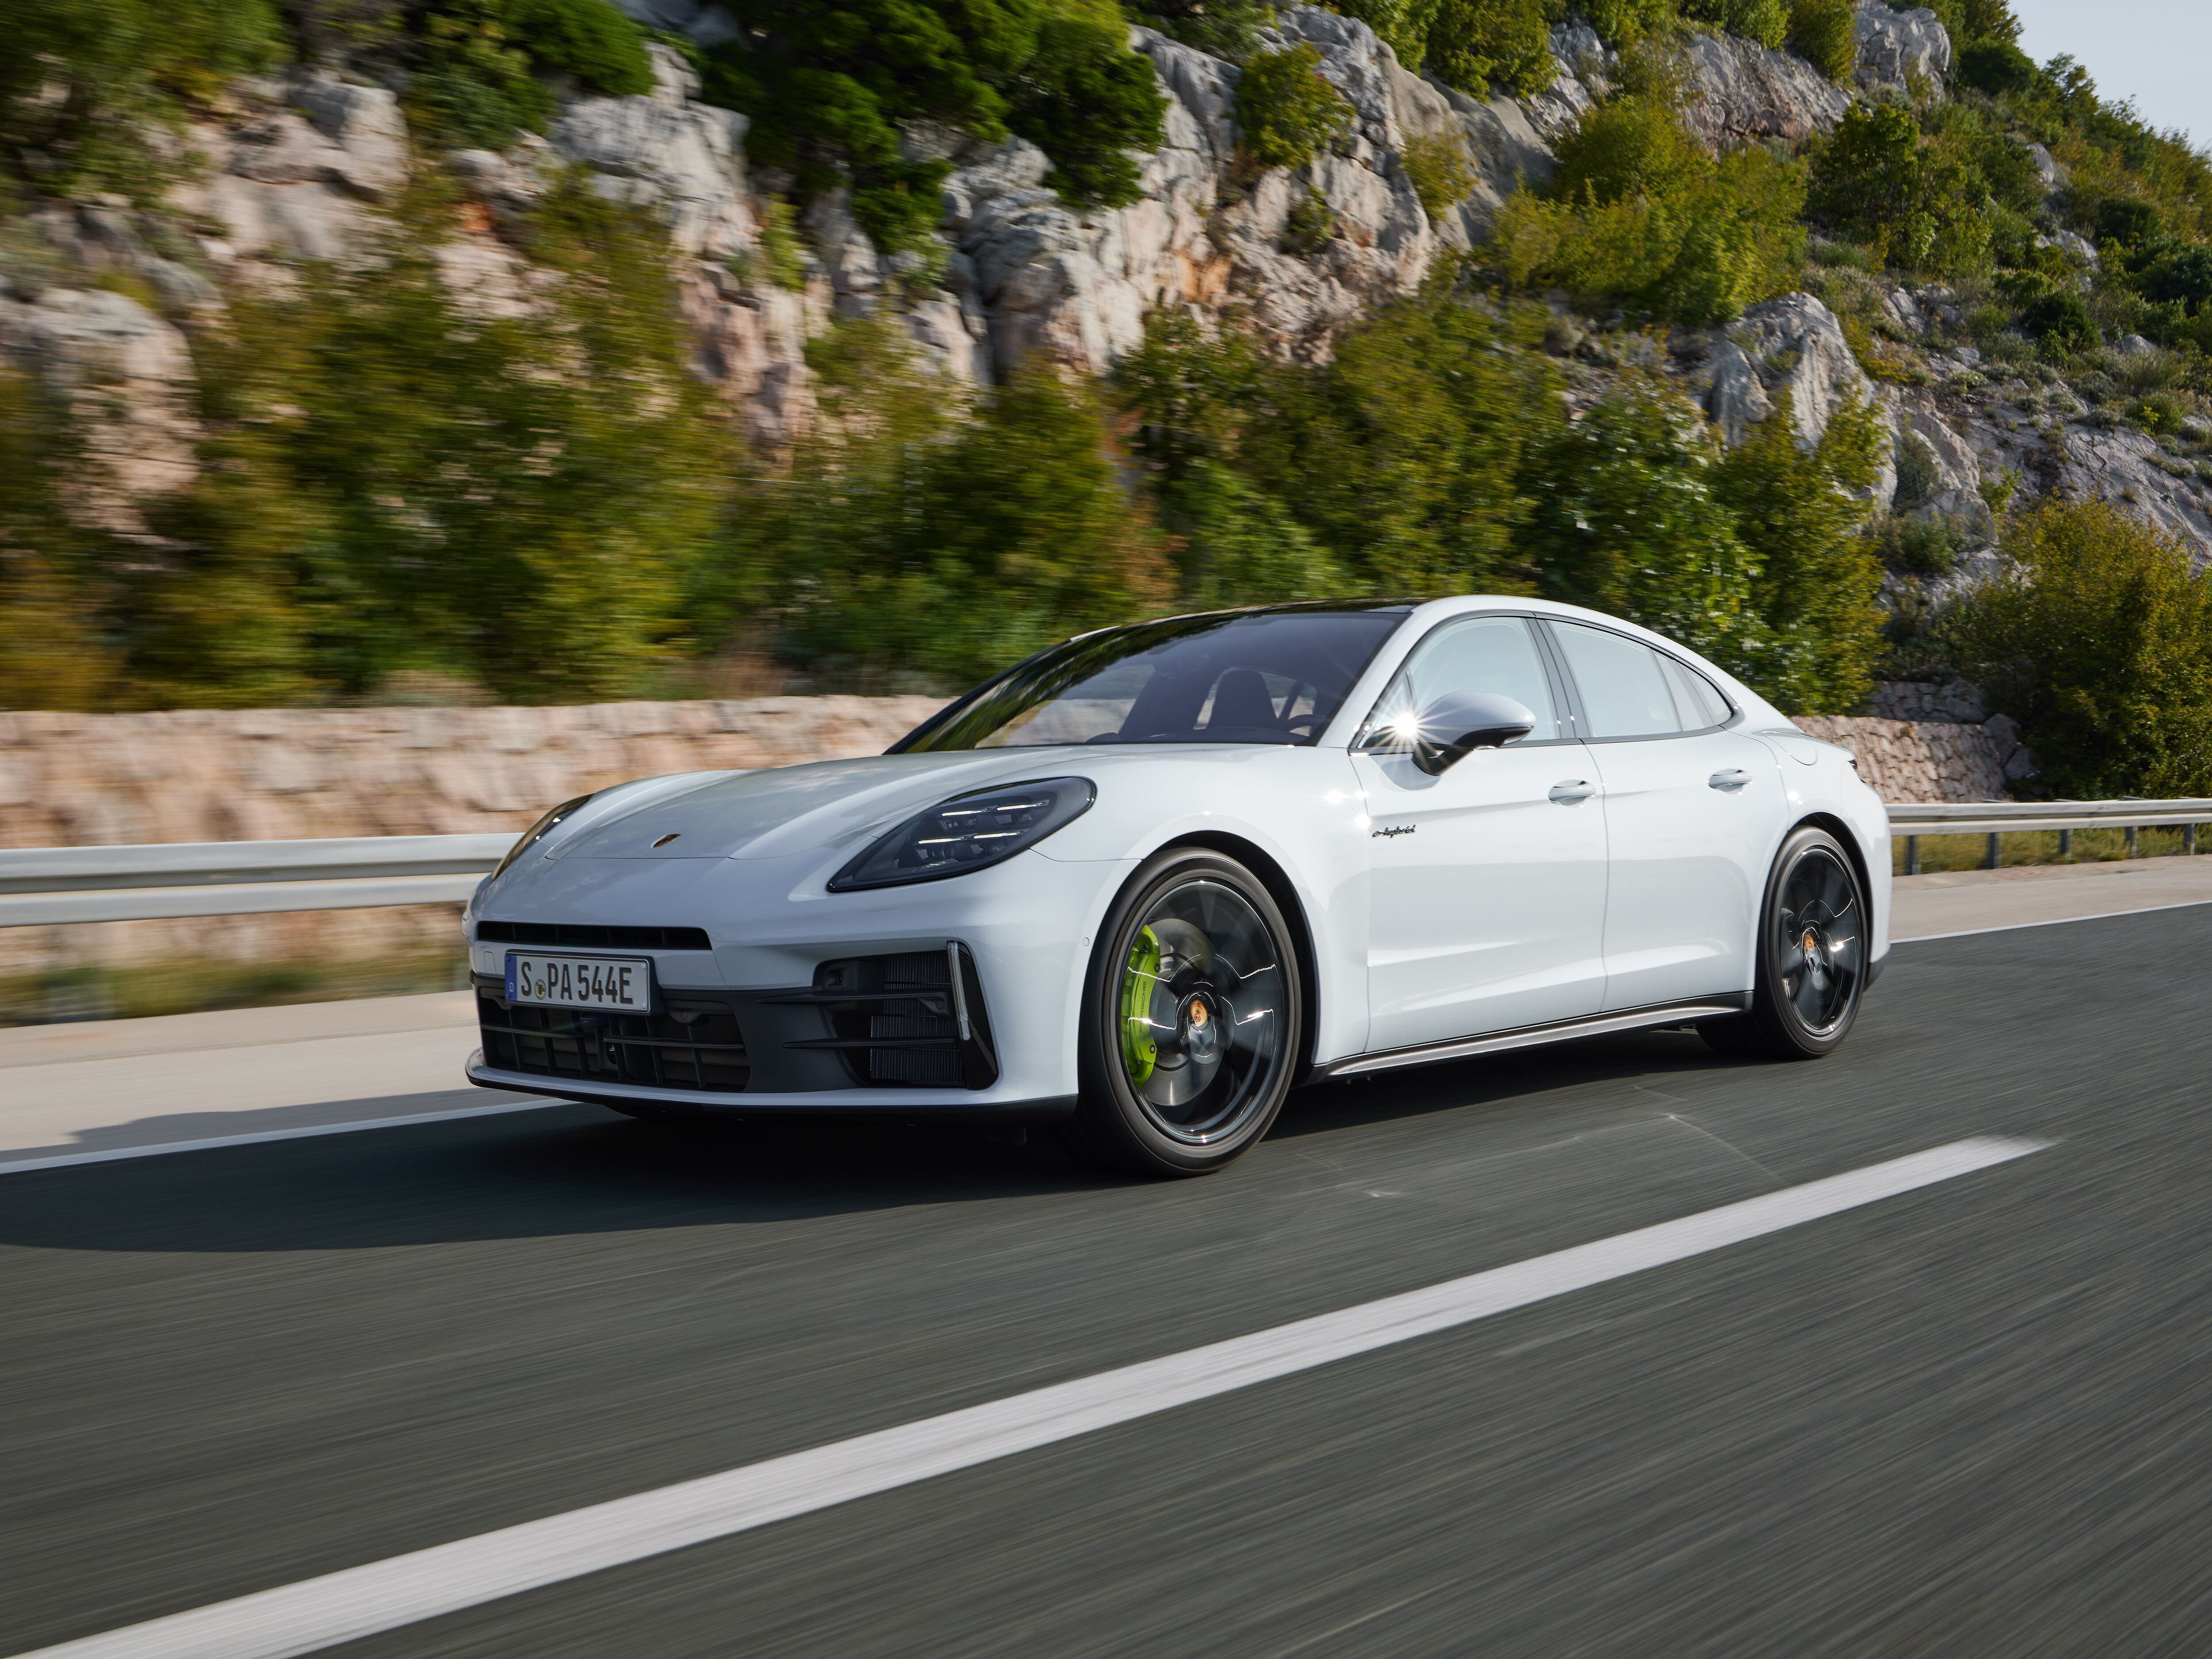 Porsche broadens Panamera range with new e-hybrid models